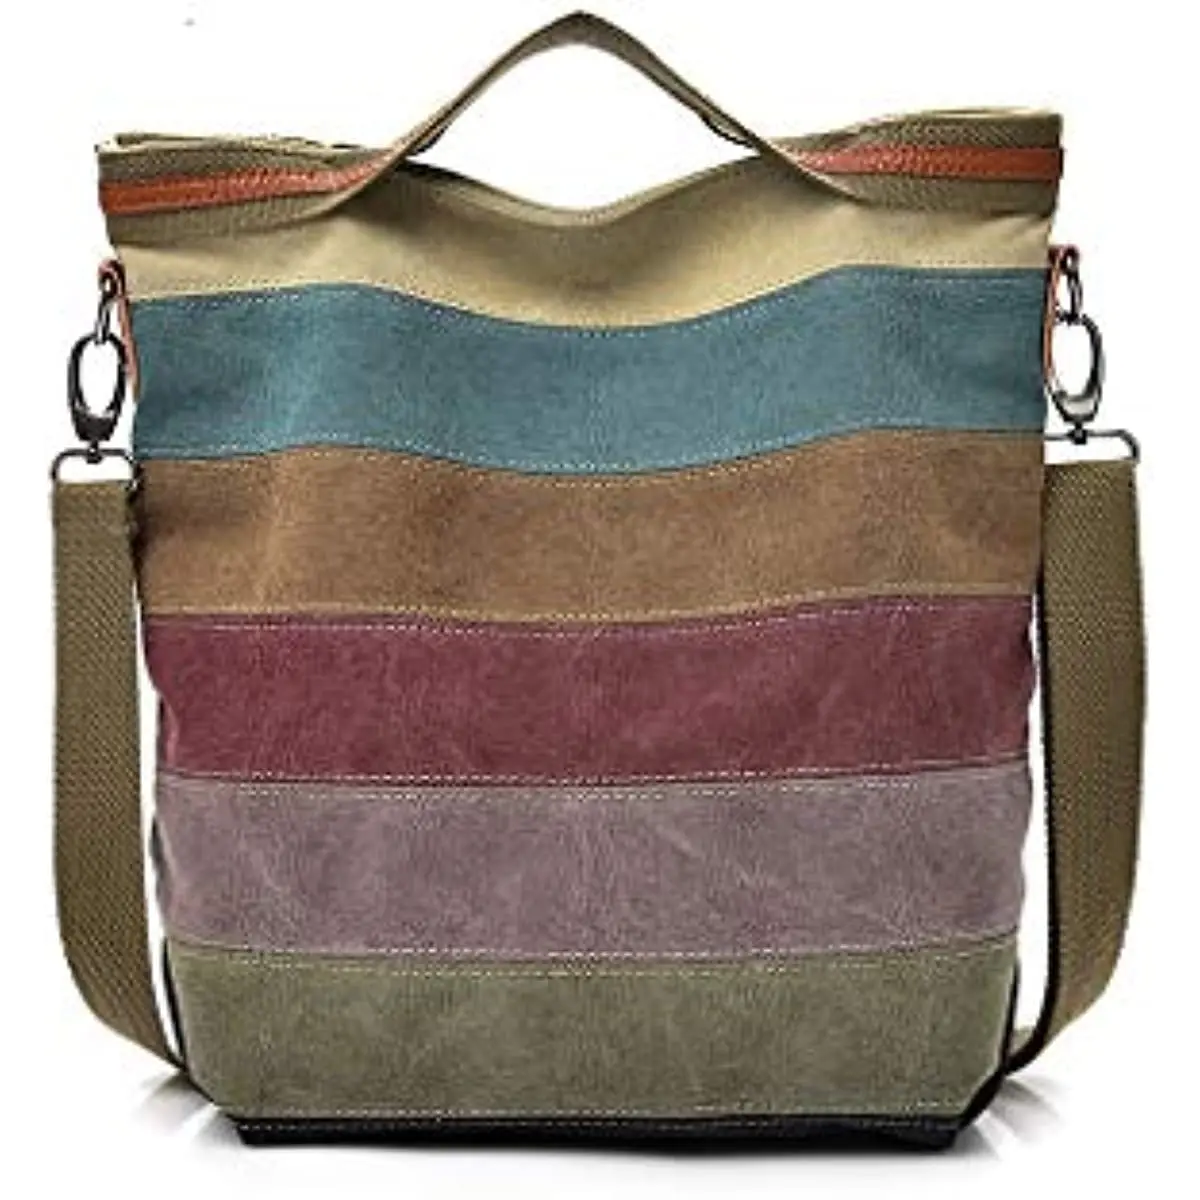 Купи Womens Shoulder Bags Canvas Hobo Handbags Multi-Color Casual Messenger Bag Top Handle Tote Crossbody Shoulder Bag Women за 1,234 рублей в магазине AliExpress